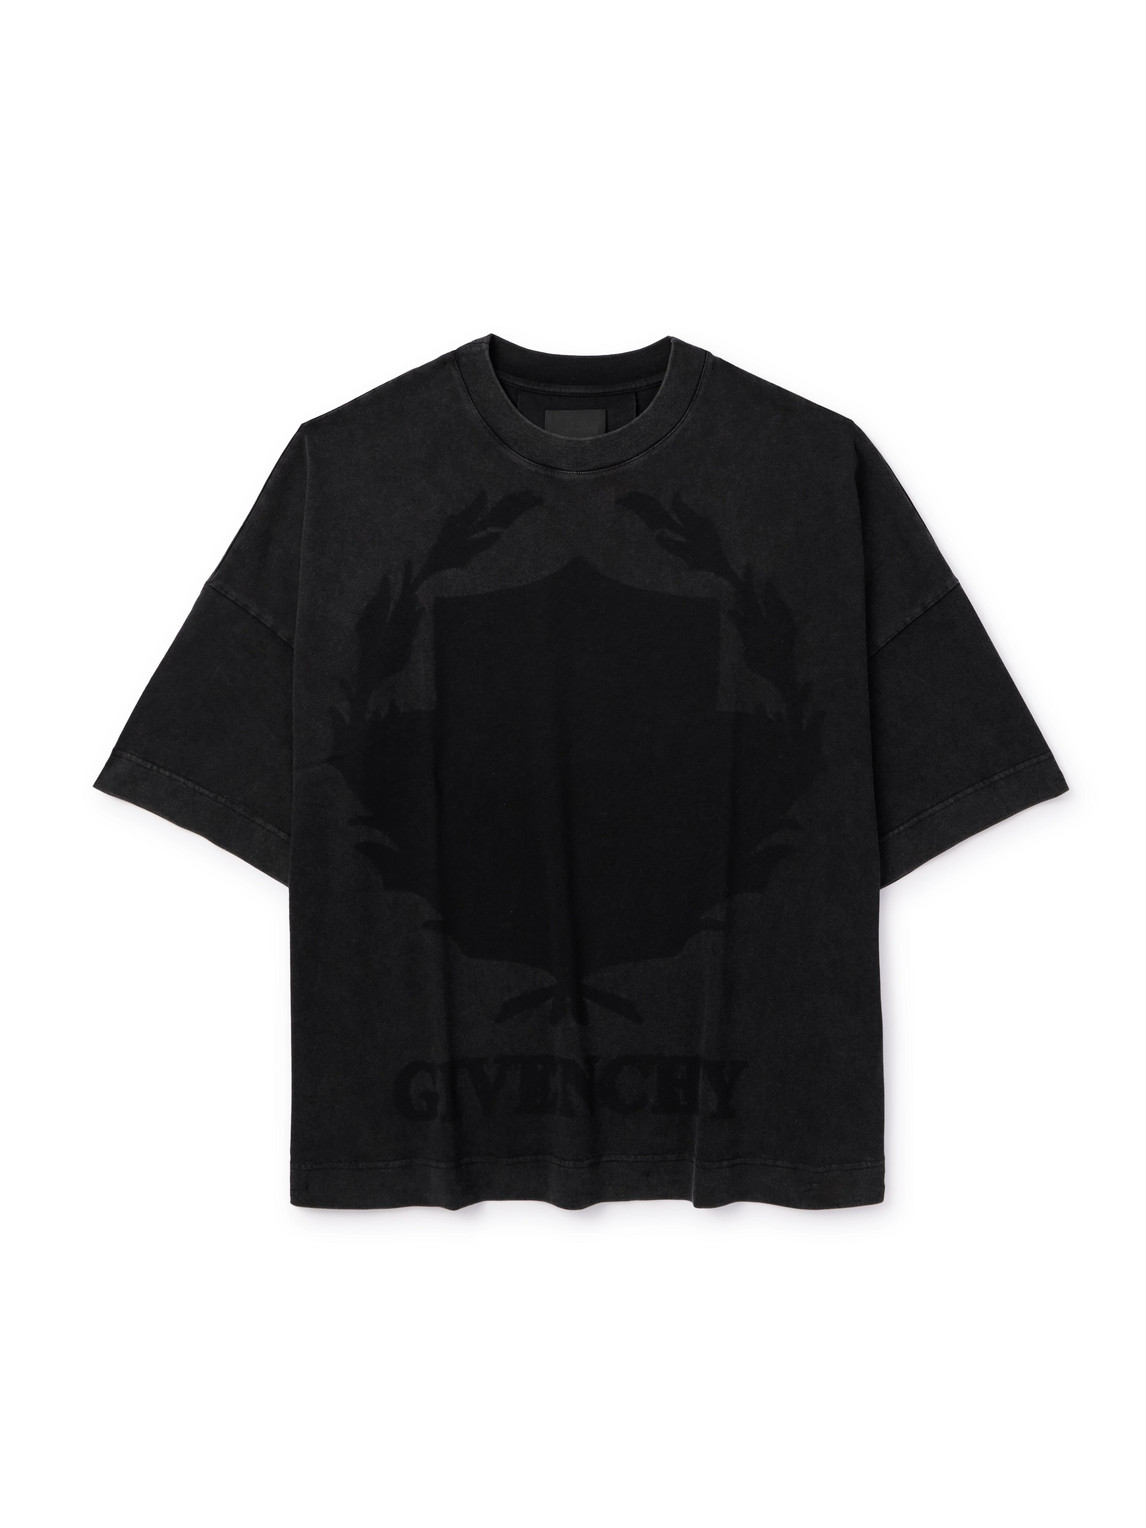 Givenchy - Logo-Print Cotton-Jersey T-Shirt - Men - Black - L von Givenchy